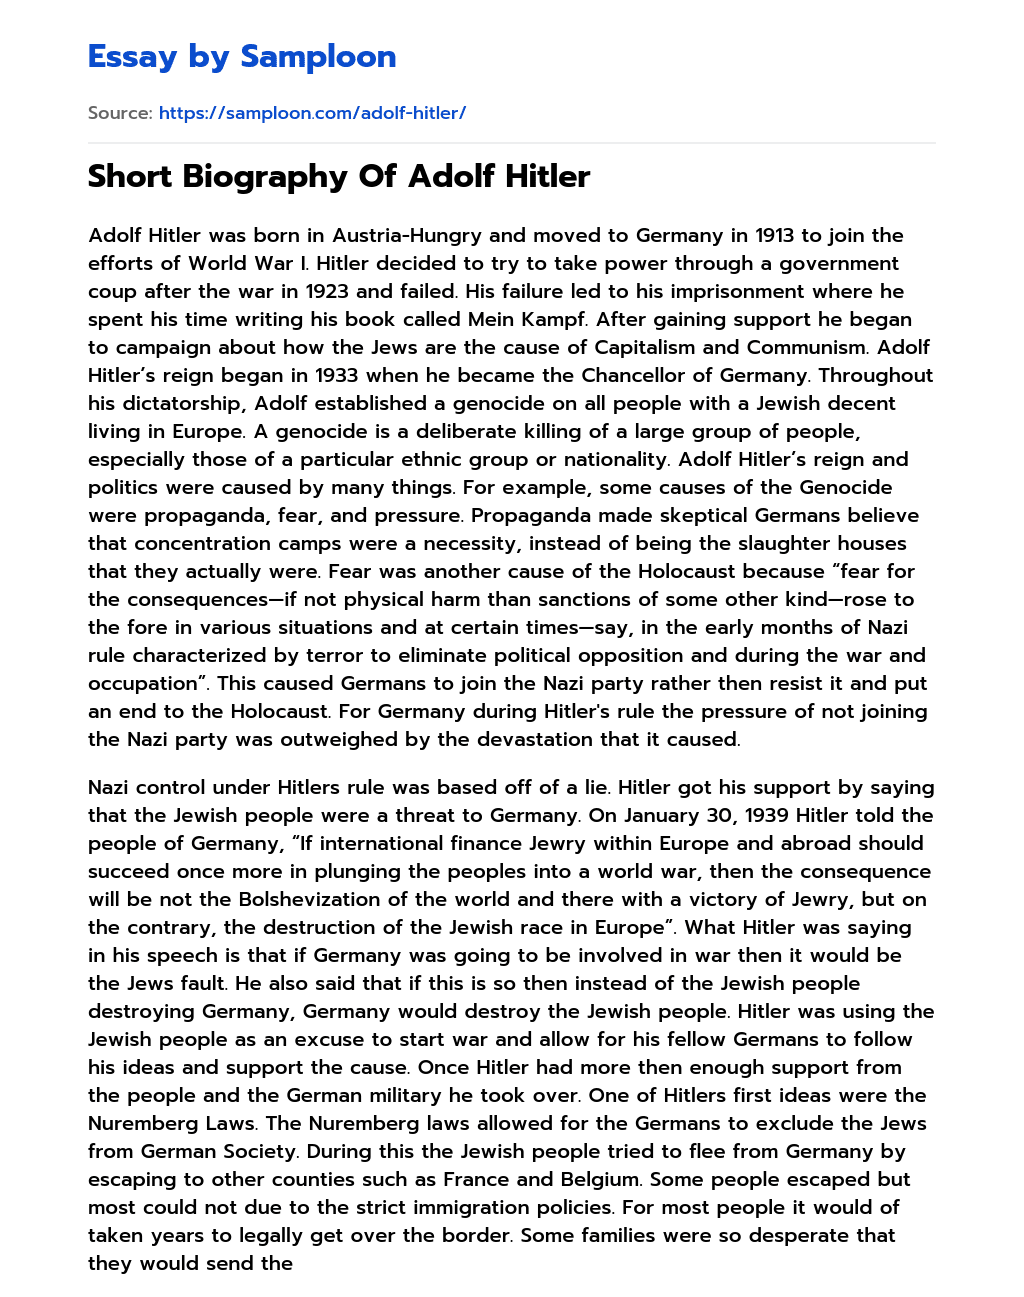 Short Biography Of Adolf Hitler essay